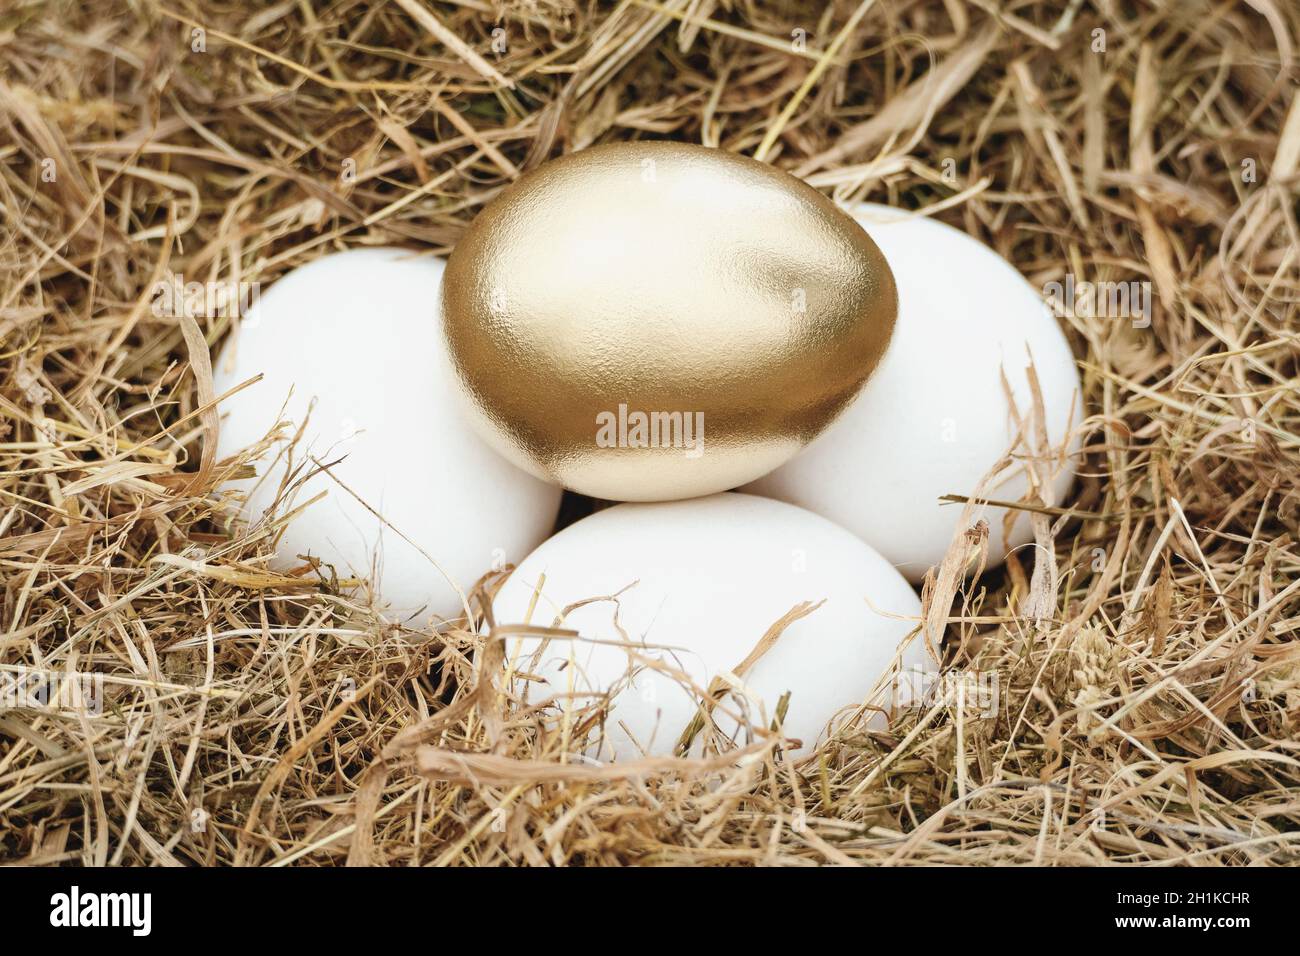 Golden egg in nest on top of white eggs, investment, retirement fund, insurance plan concept Stock Photo